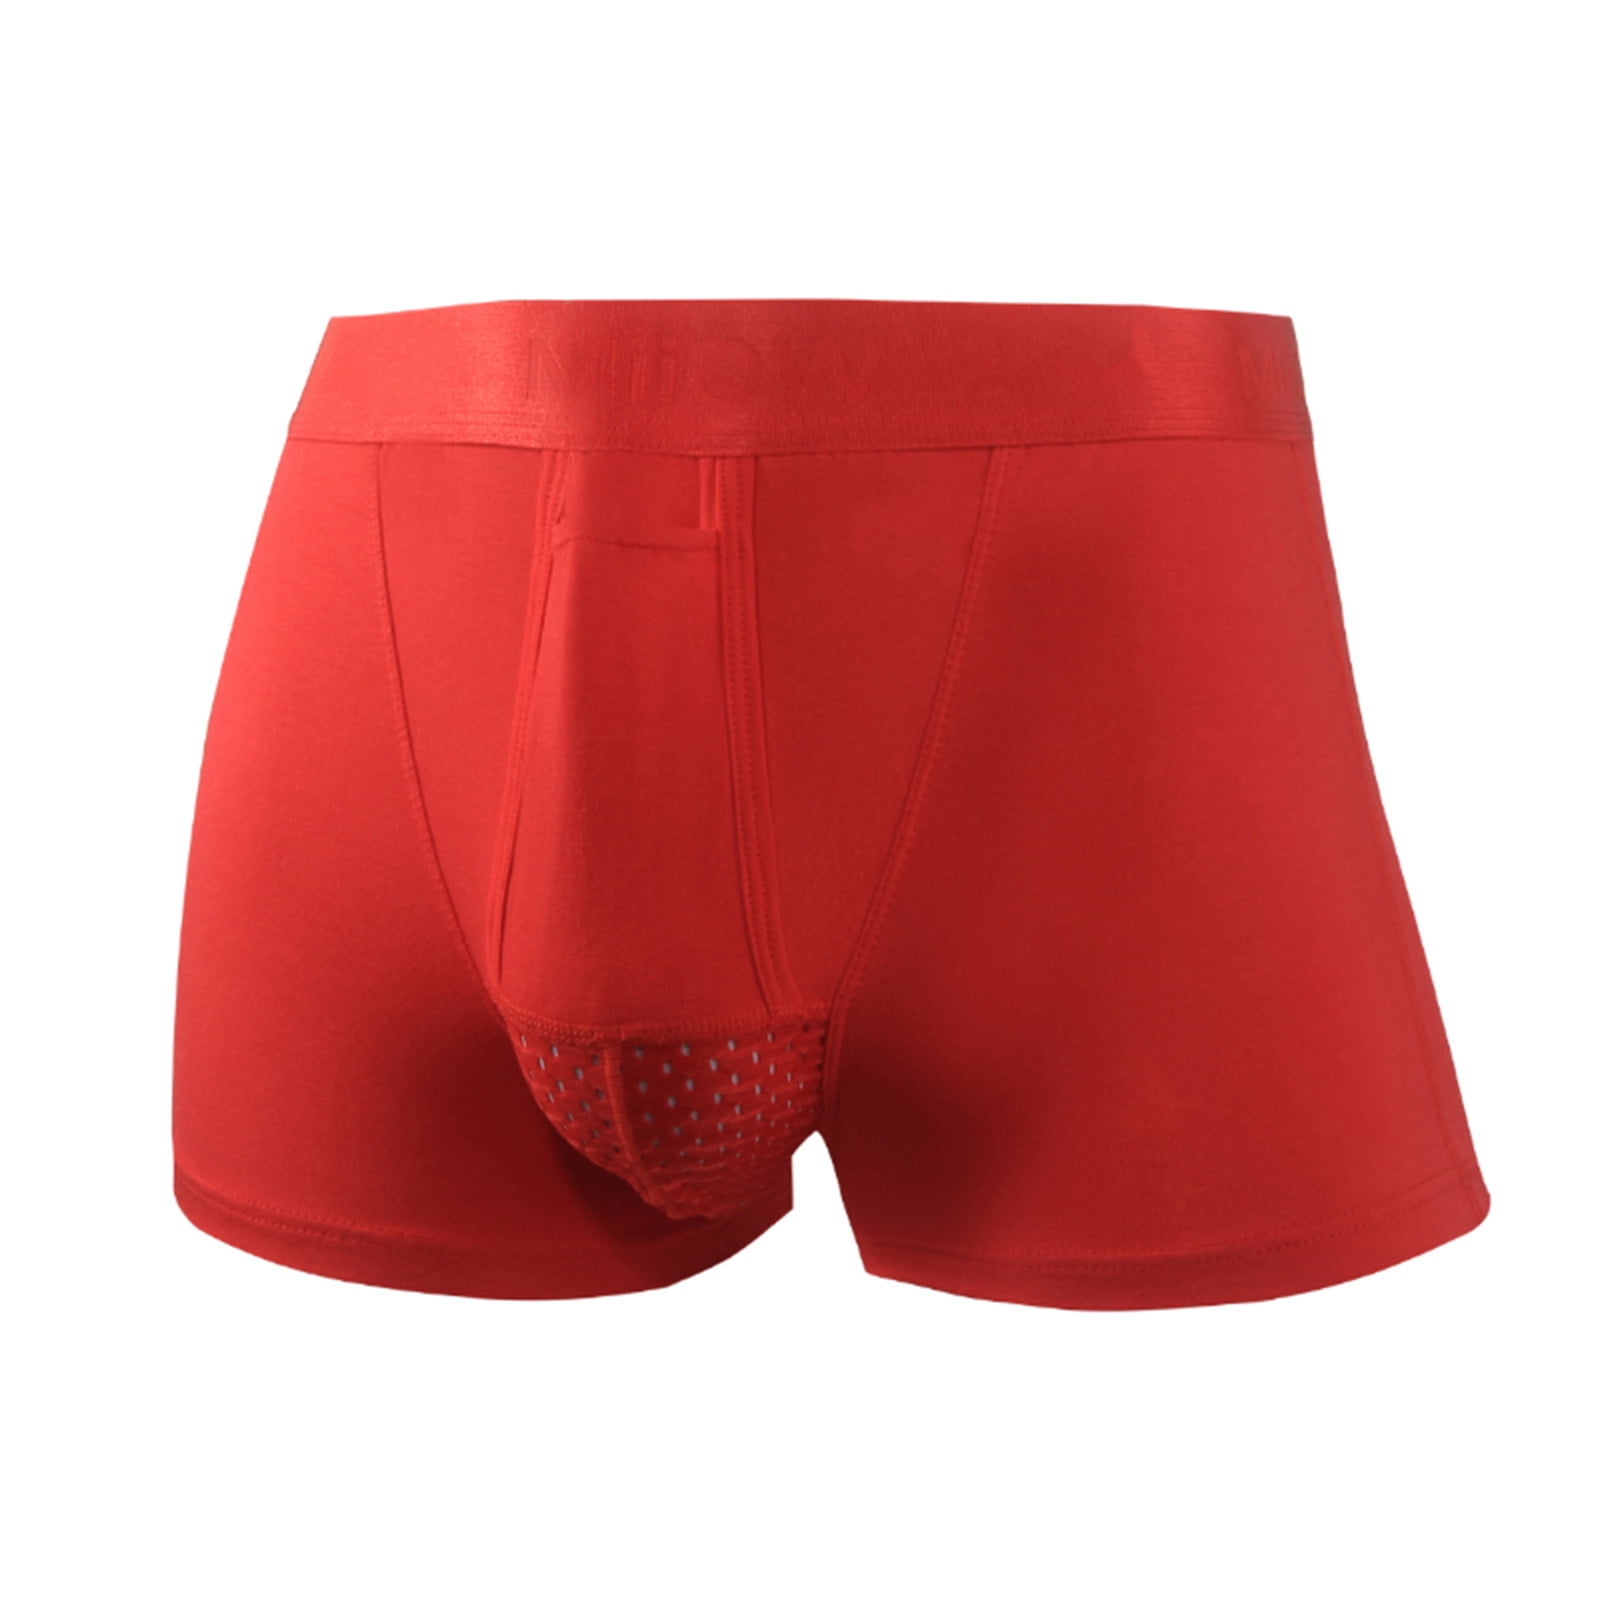 Soft Modal Men's Underwear Graphene Moisture-Wicking L